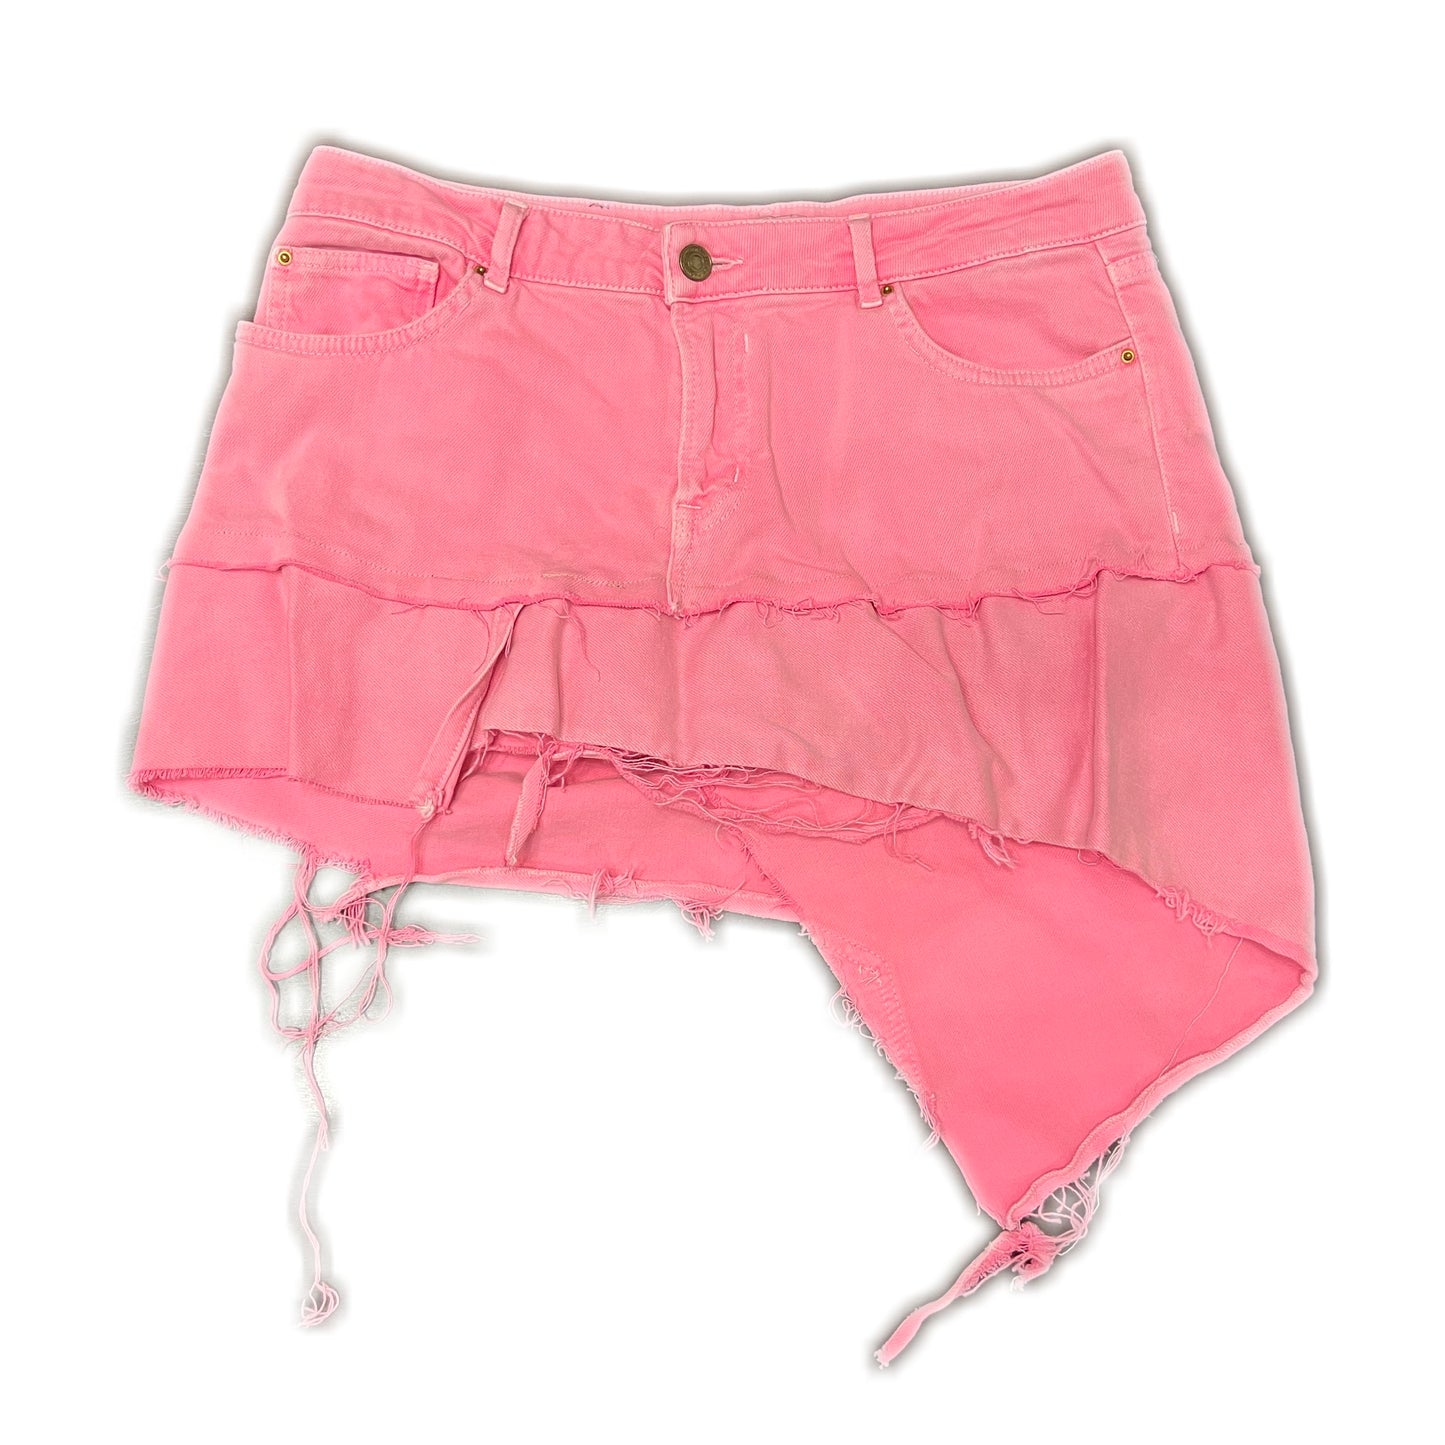 Up-cycled Pink Denim Mini Skirt